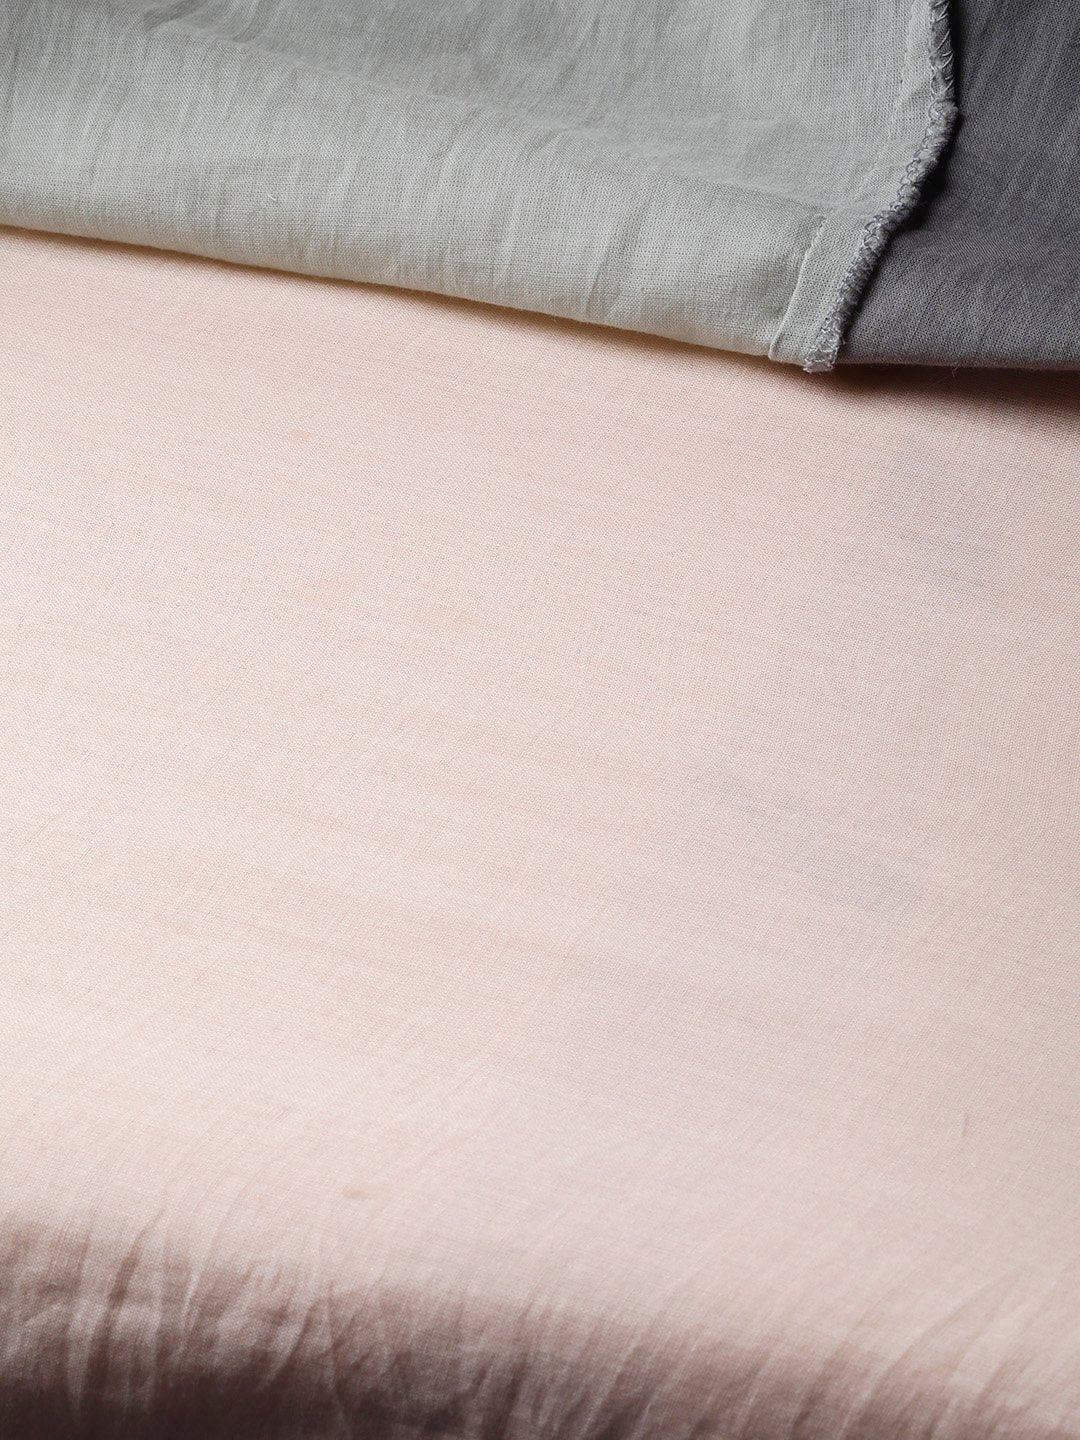 Ishin Women's Cotton Peach & Grey Solid A-Line Top Skirt Set